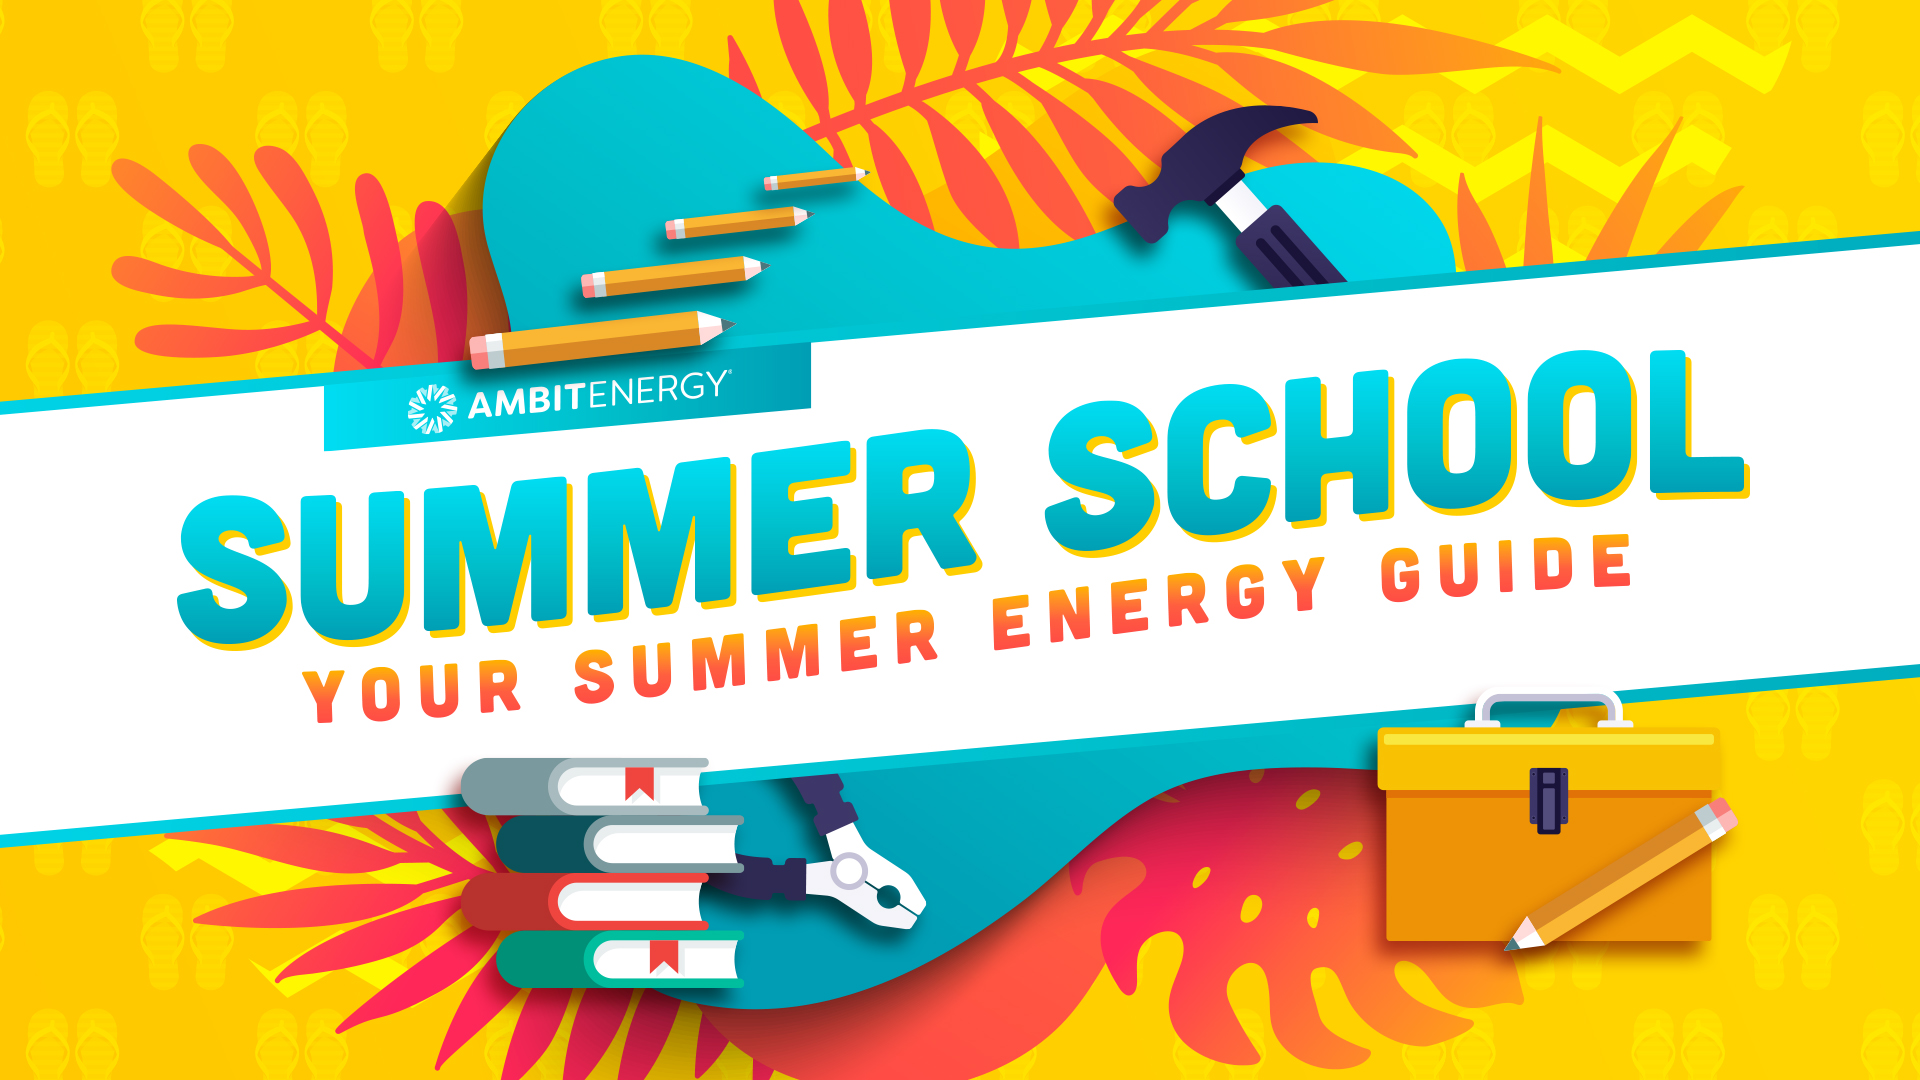 Summer School - Your Summer Energy Guide